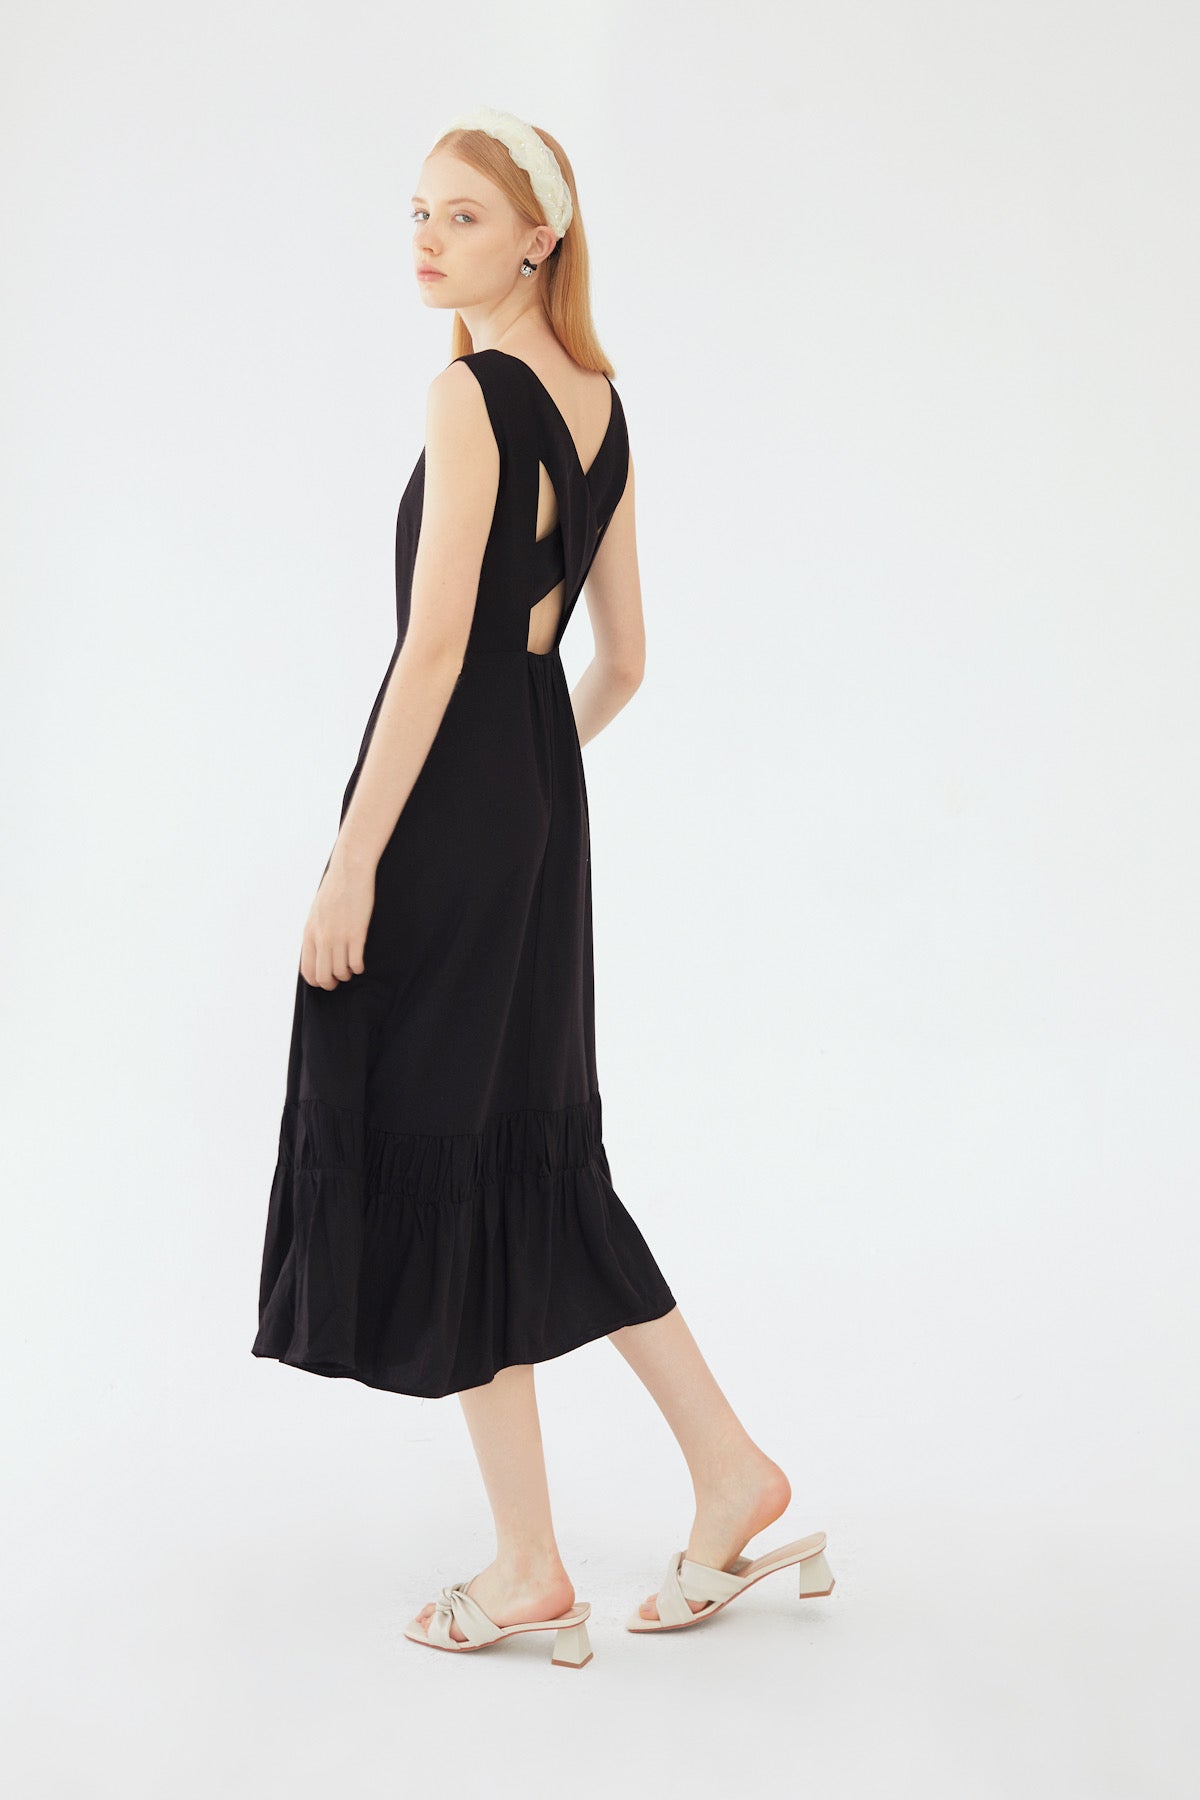 Cute Black Dress - Bodycon Dress - Midi Dress - Back Cutout Dress - Lulus